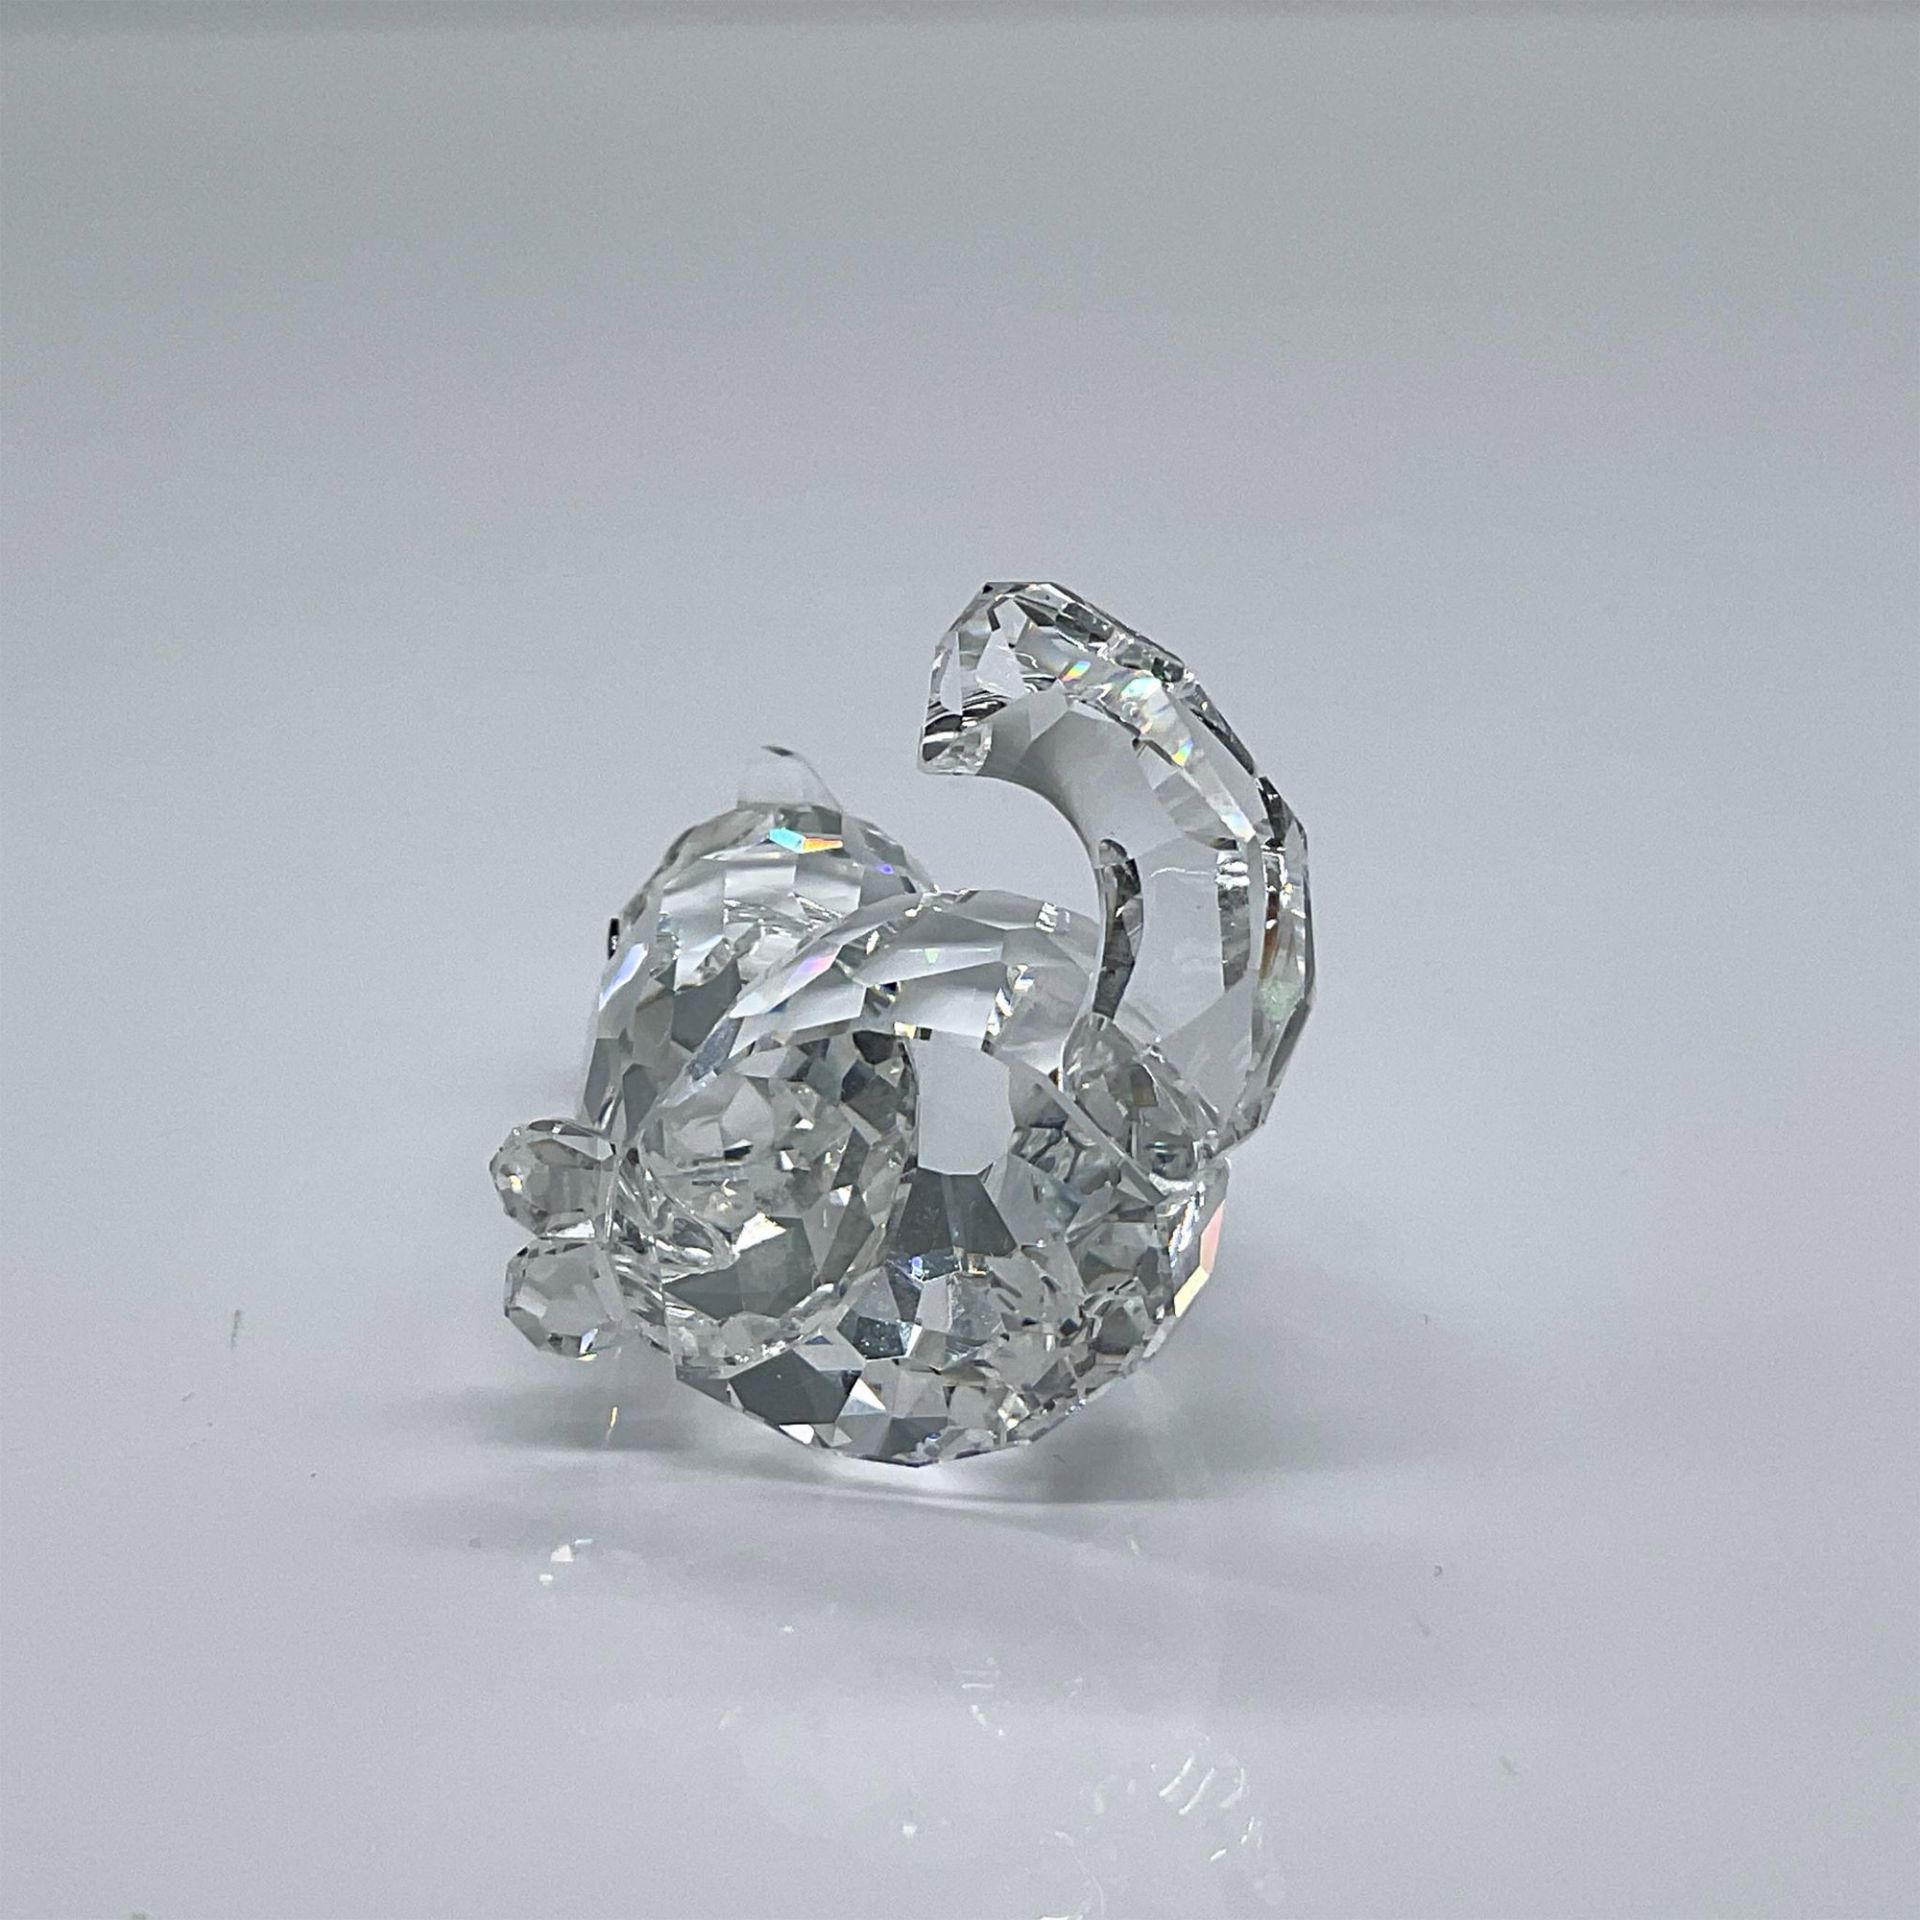 Swarovski Crystal Figurine, Cat Sitting - Image 3 of 3